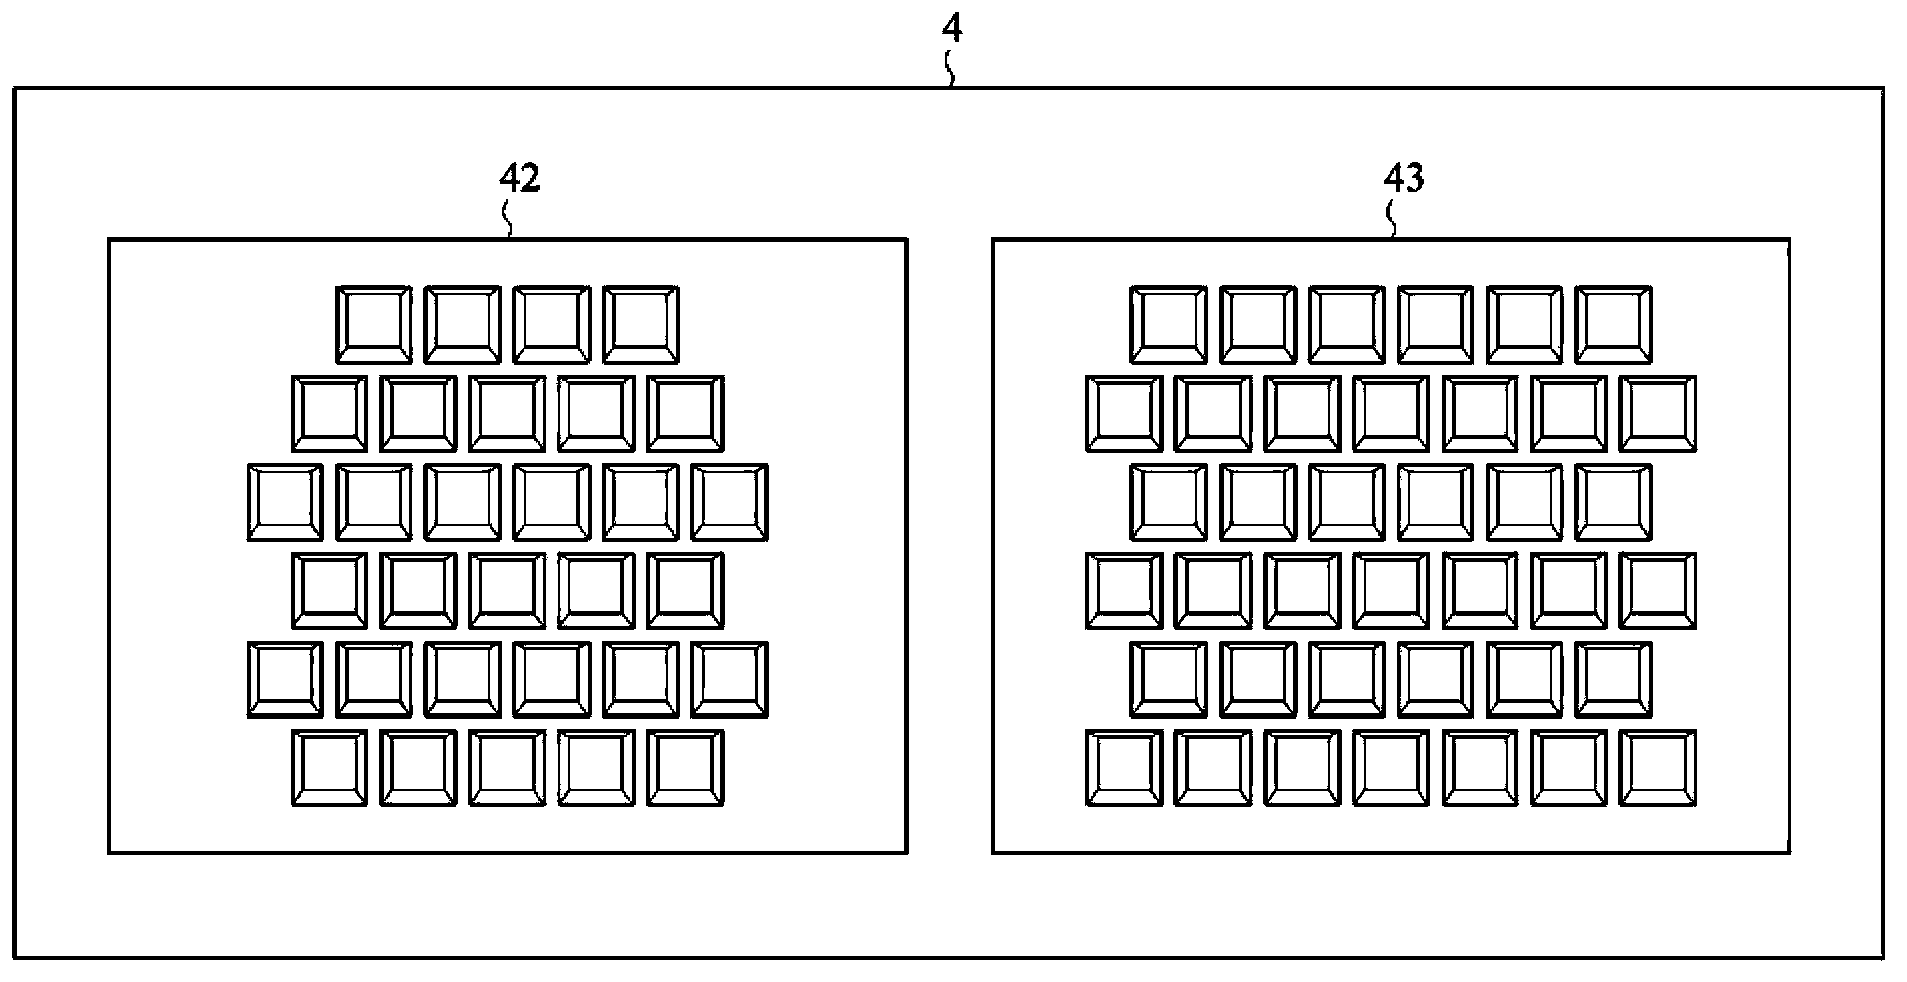 Keyboard signal processing system